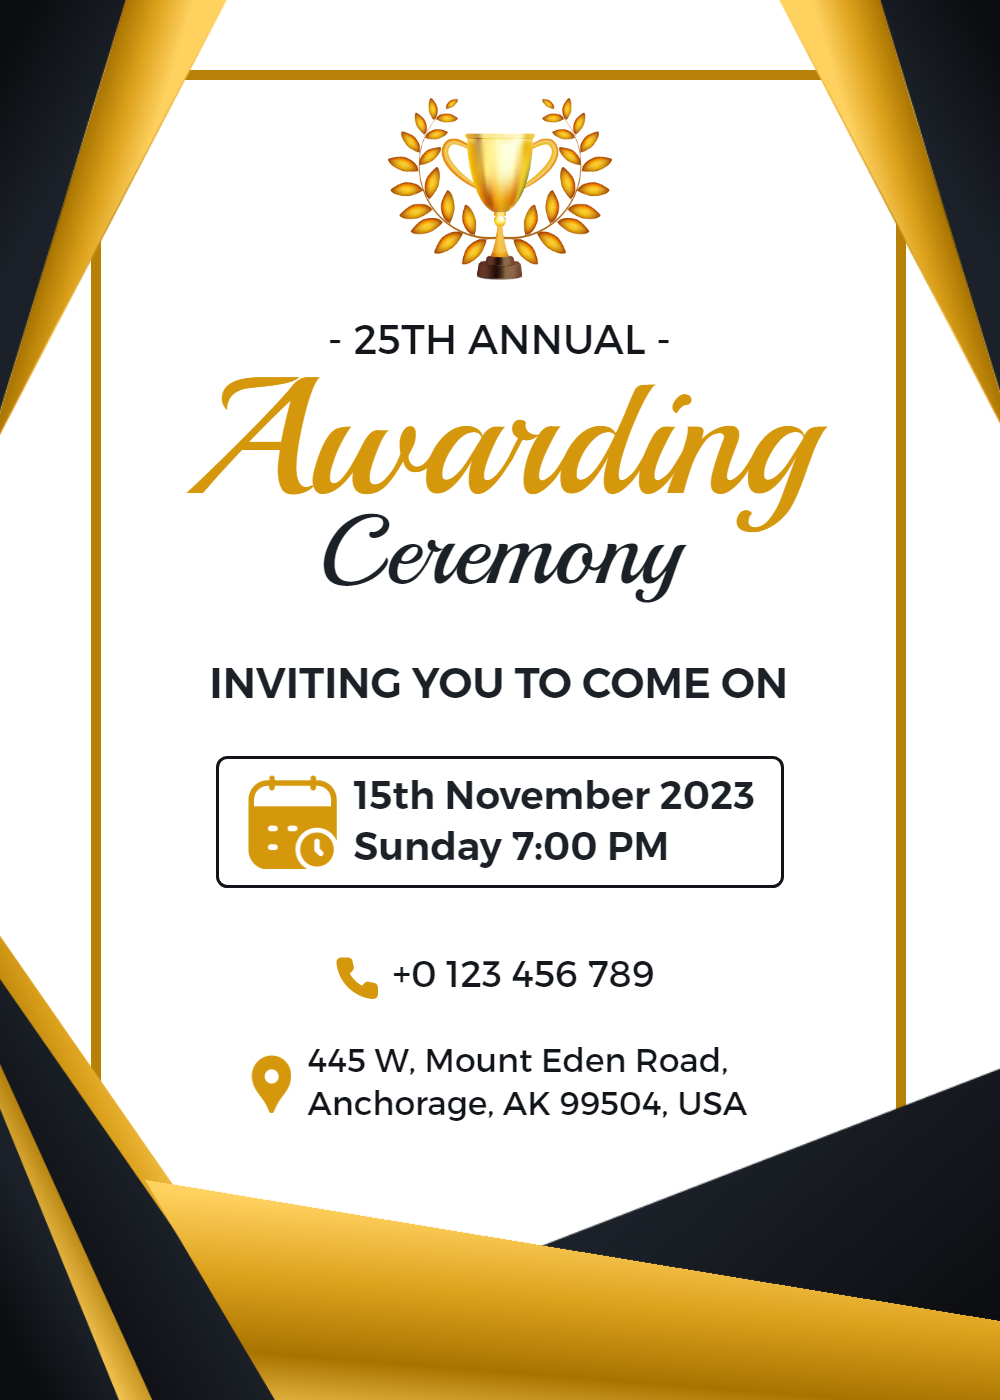 Award Night ceremony Invitation Template